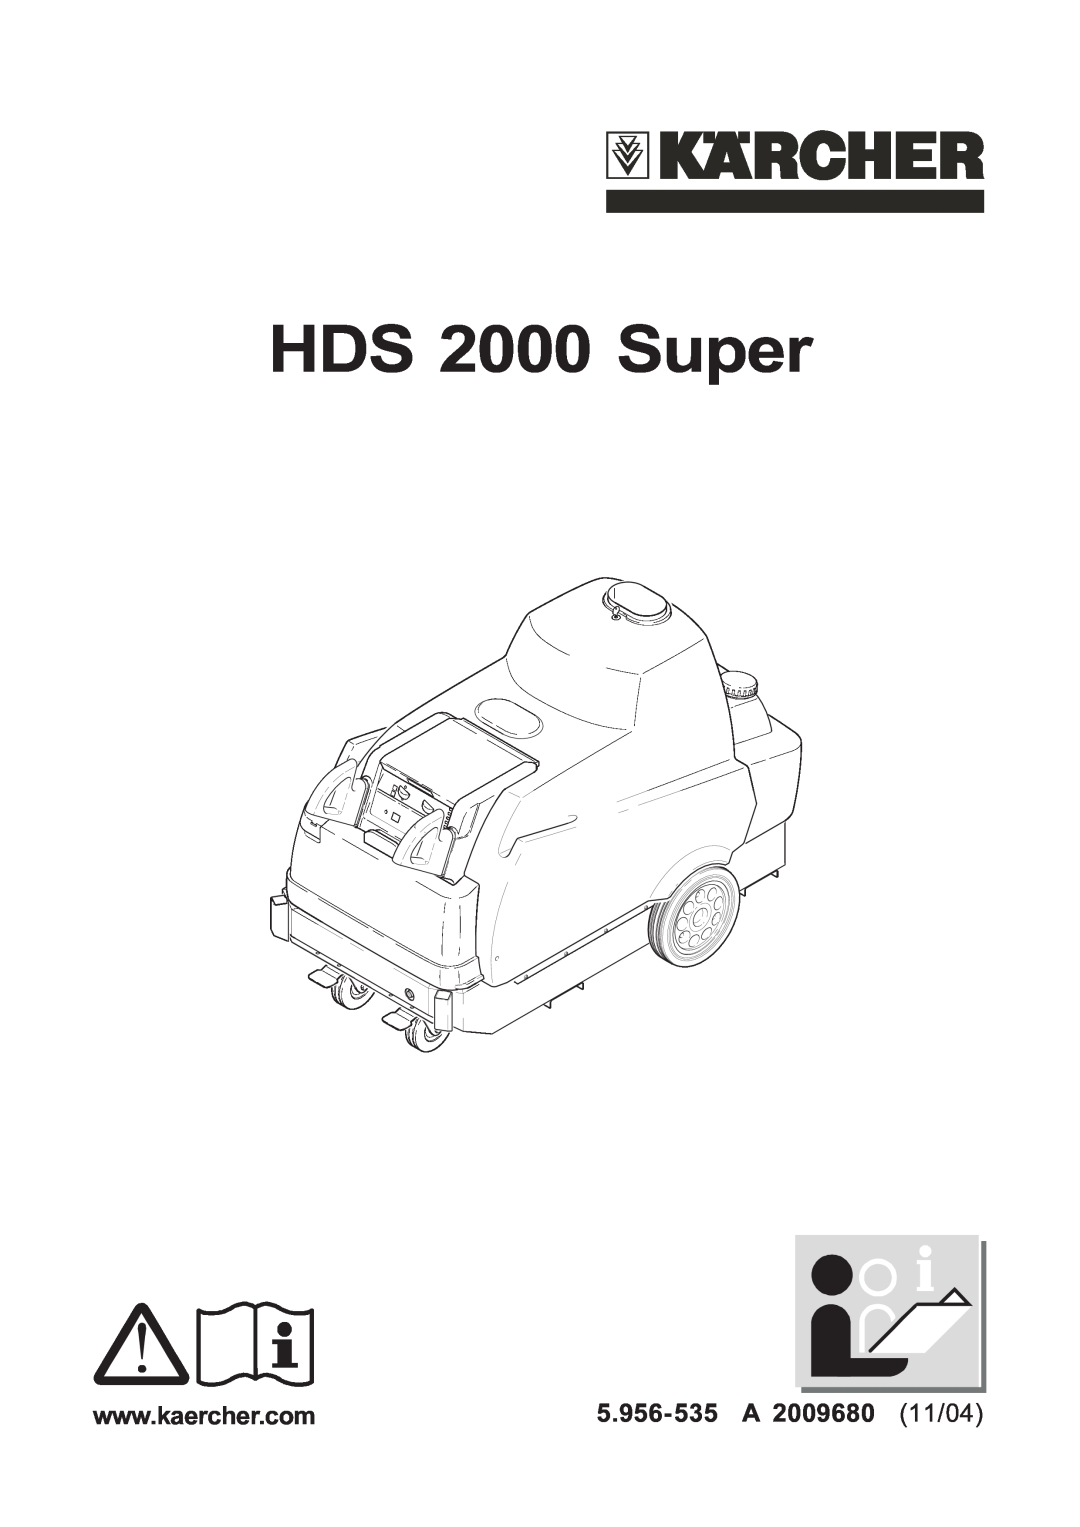 Karcher manual HDS 2000 Super, 5.956-535 A 2009680 11/04 